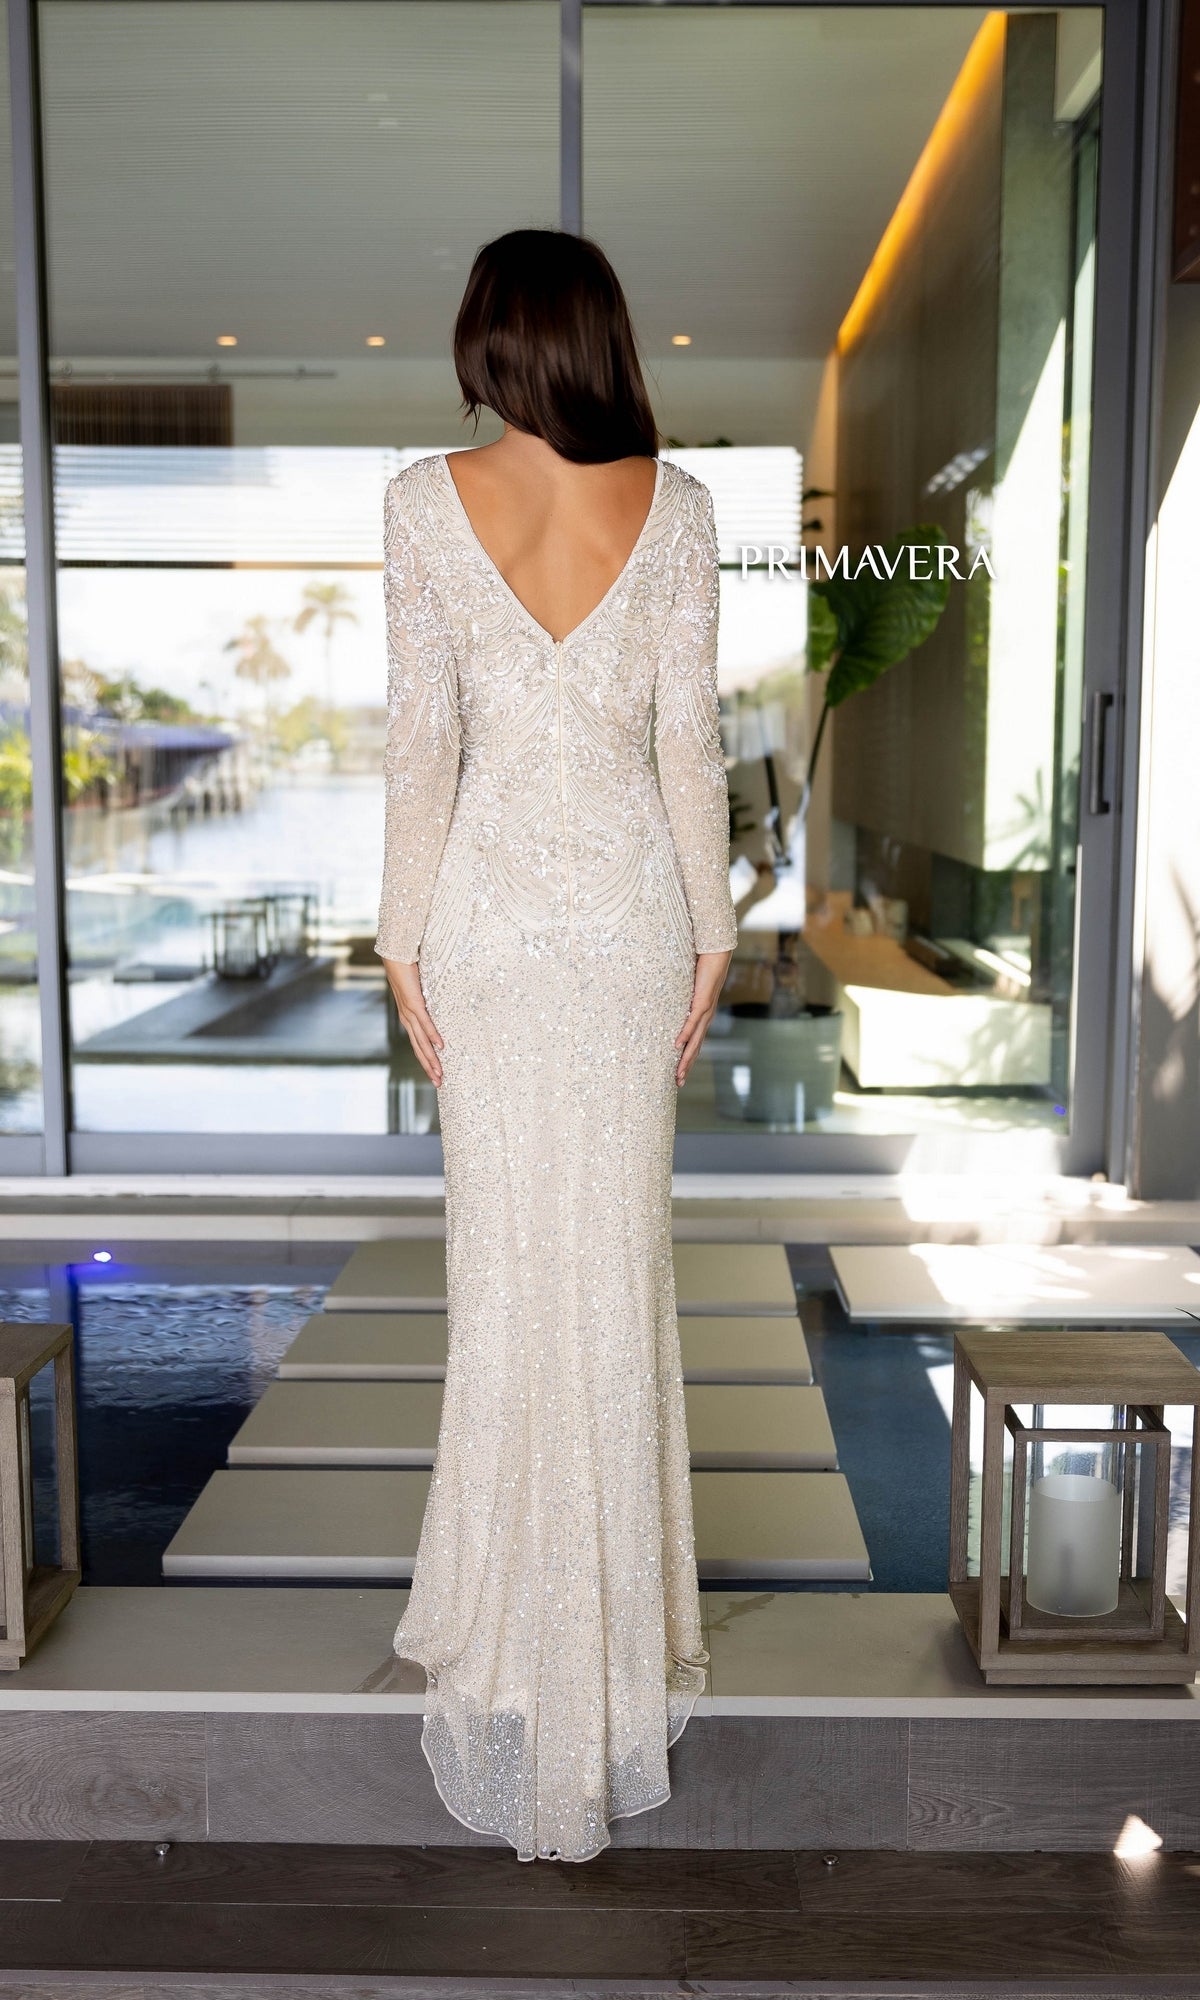 Long Prom Dress 12165 by Primavera